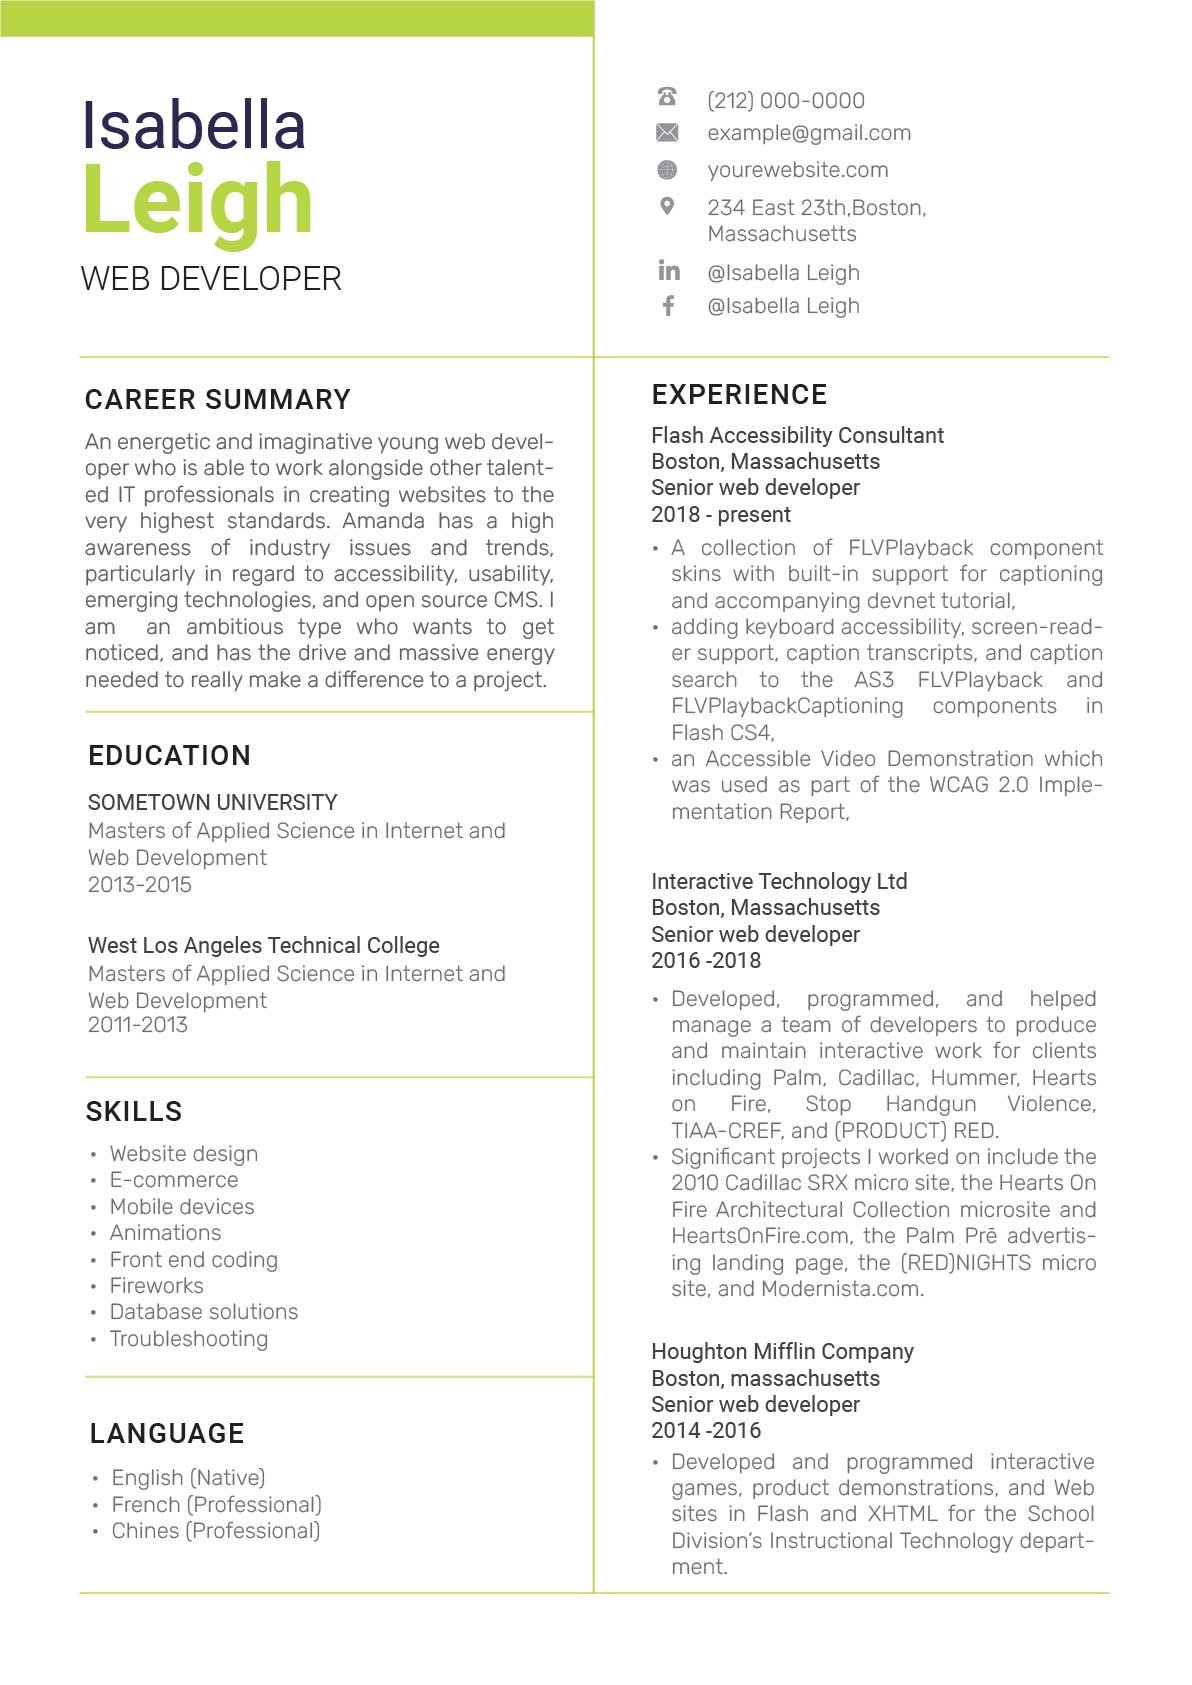 Professional resume for a web development company.